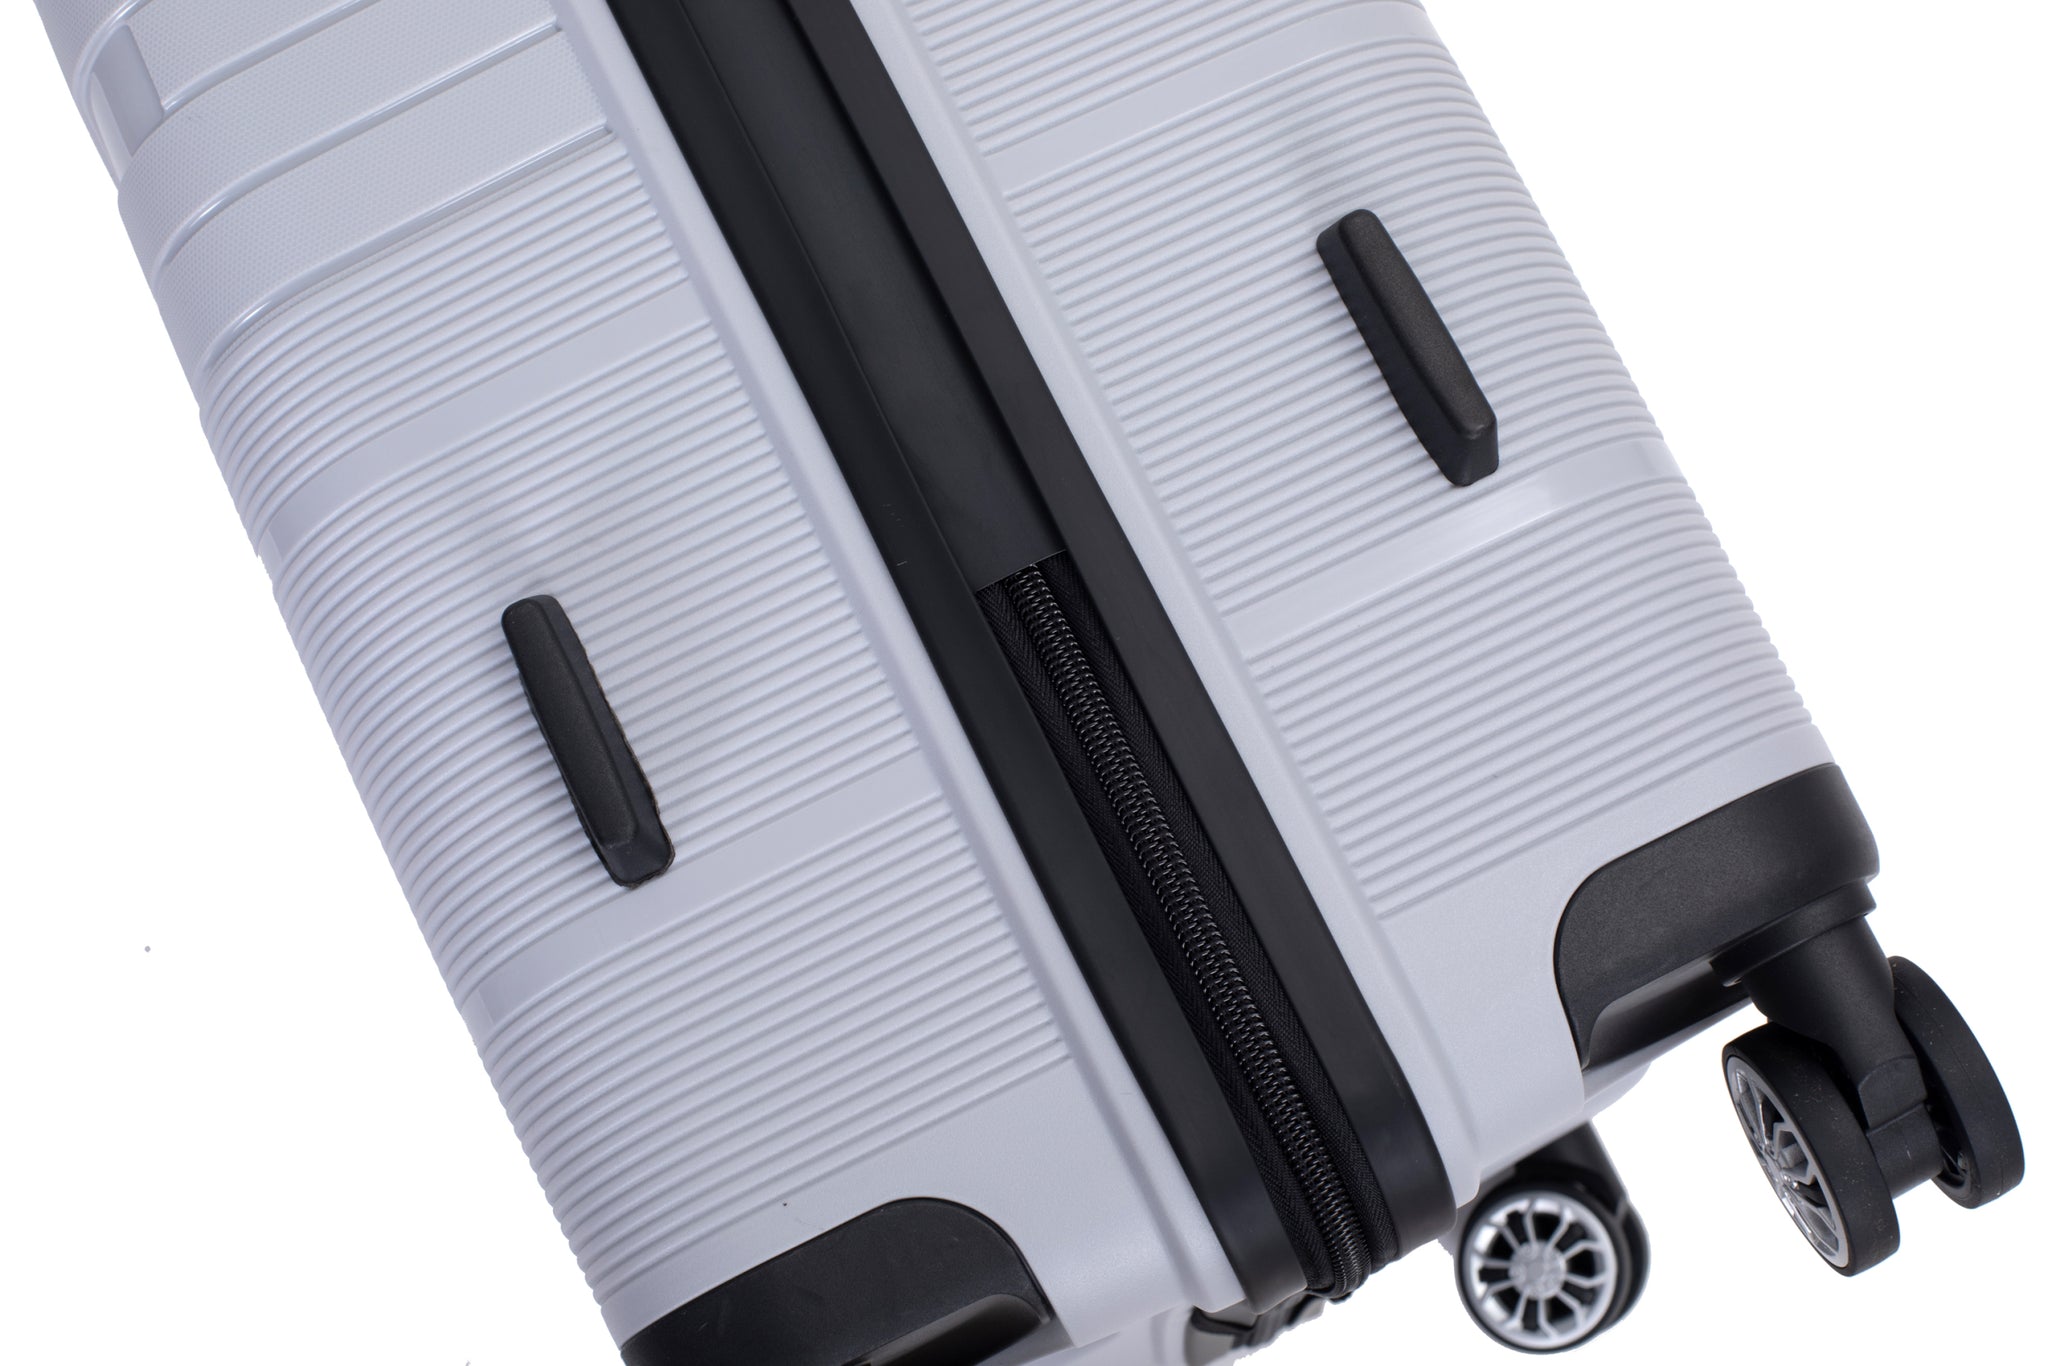 Hardshell Suitcase Double Spinner Wheels PP Luggage silver-polypropylene